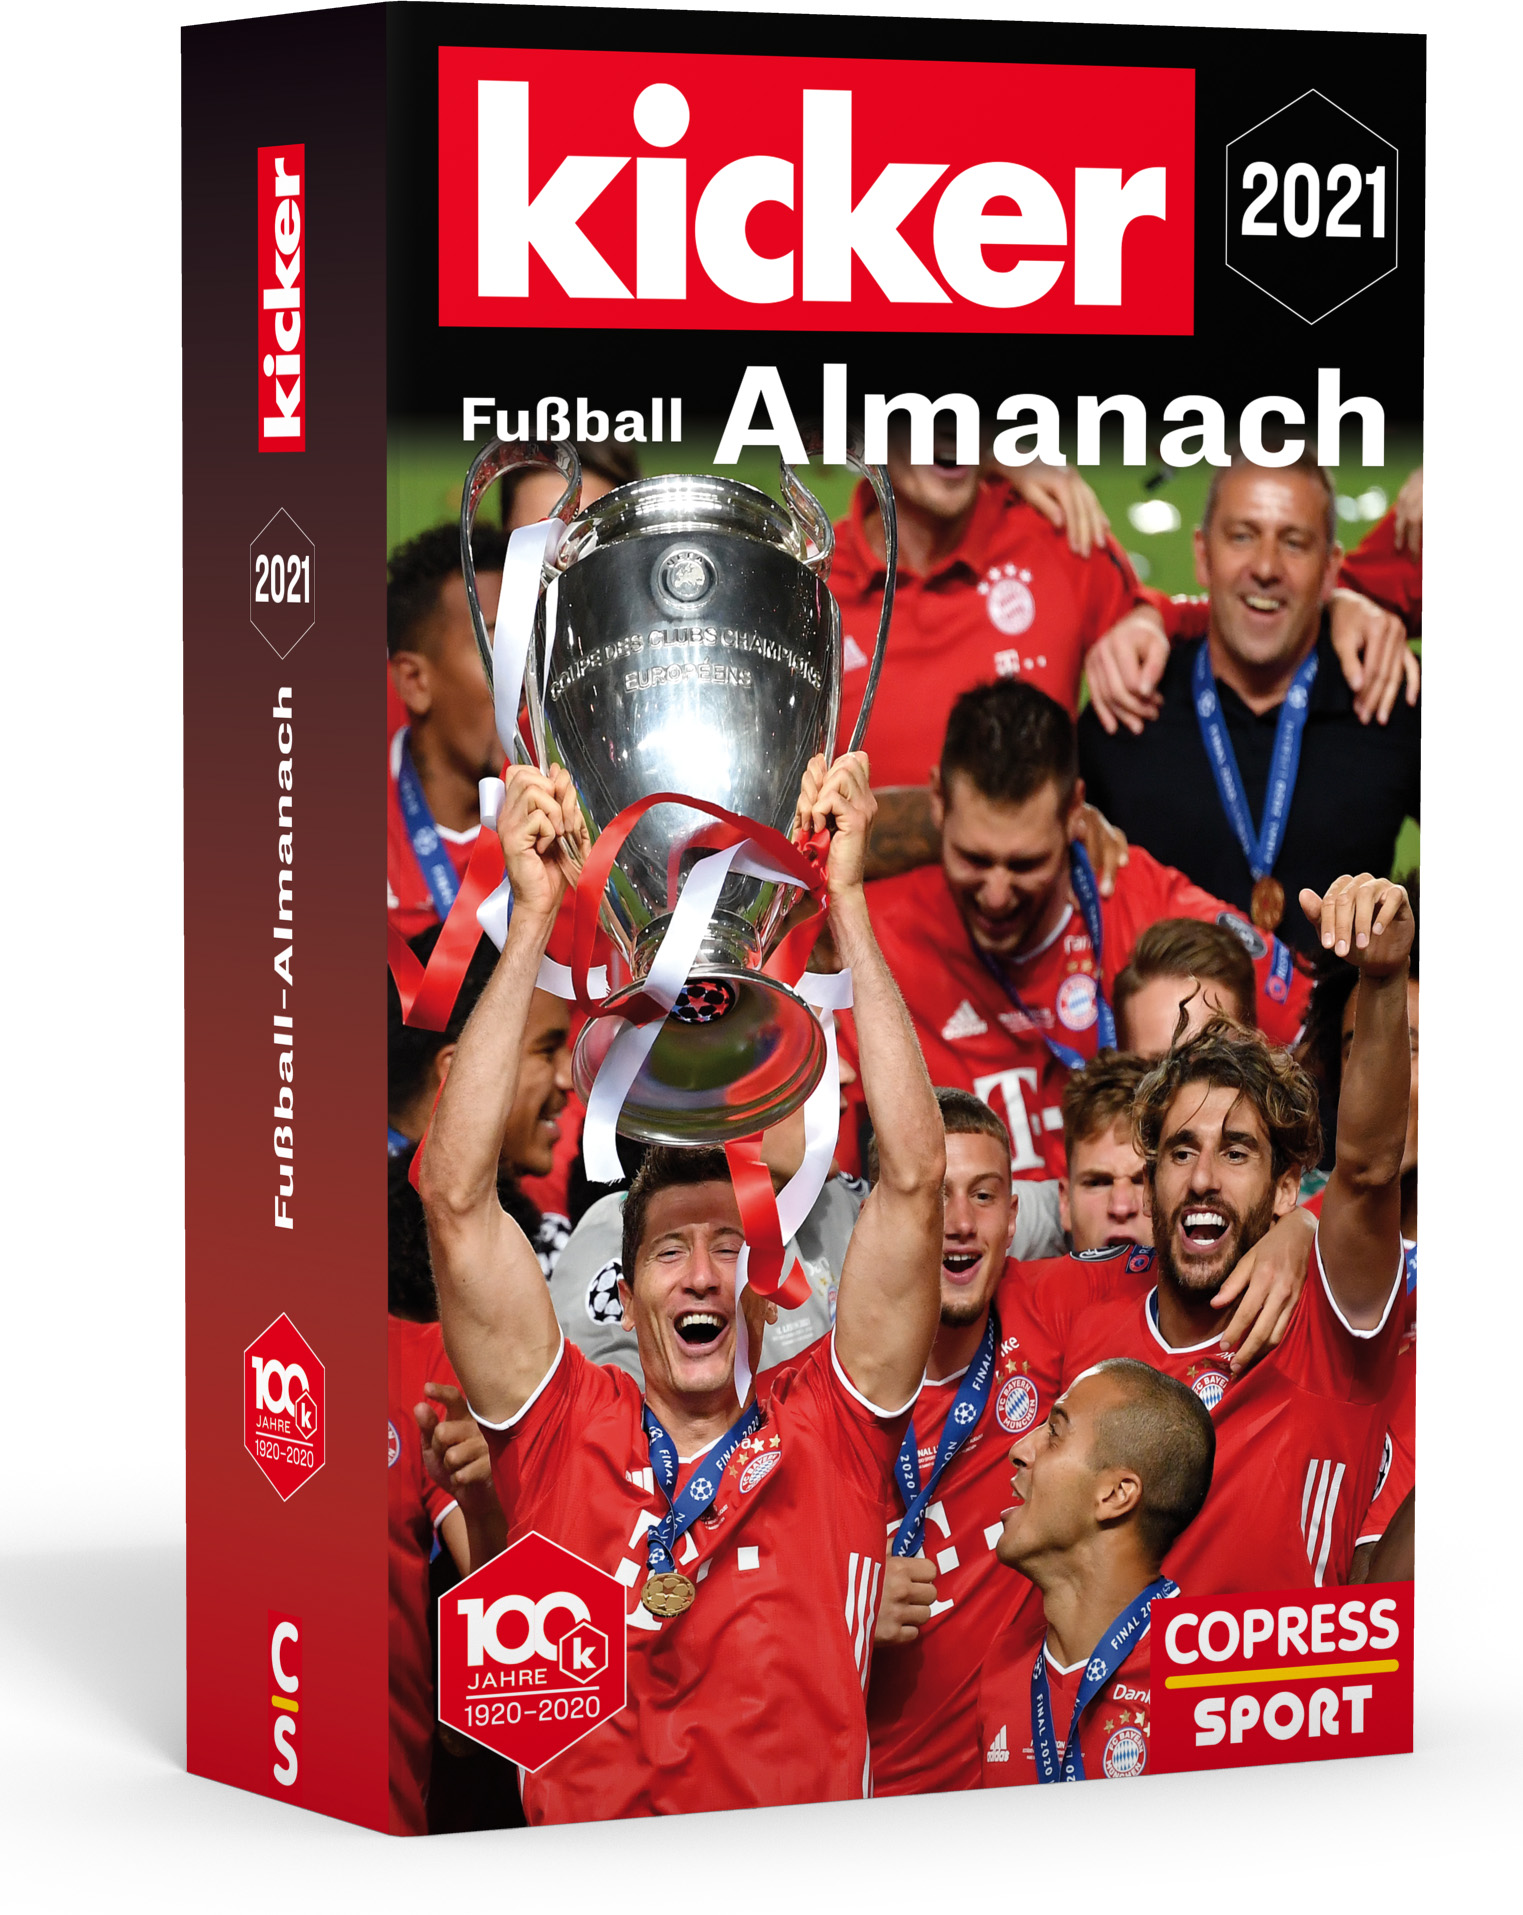 kicker fuball almanach 2021